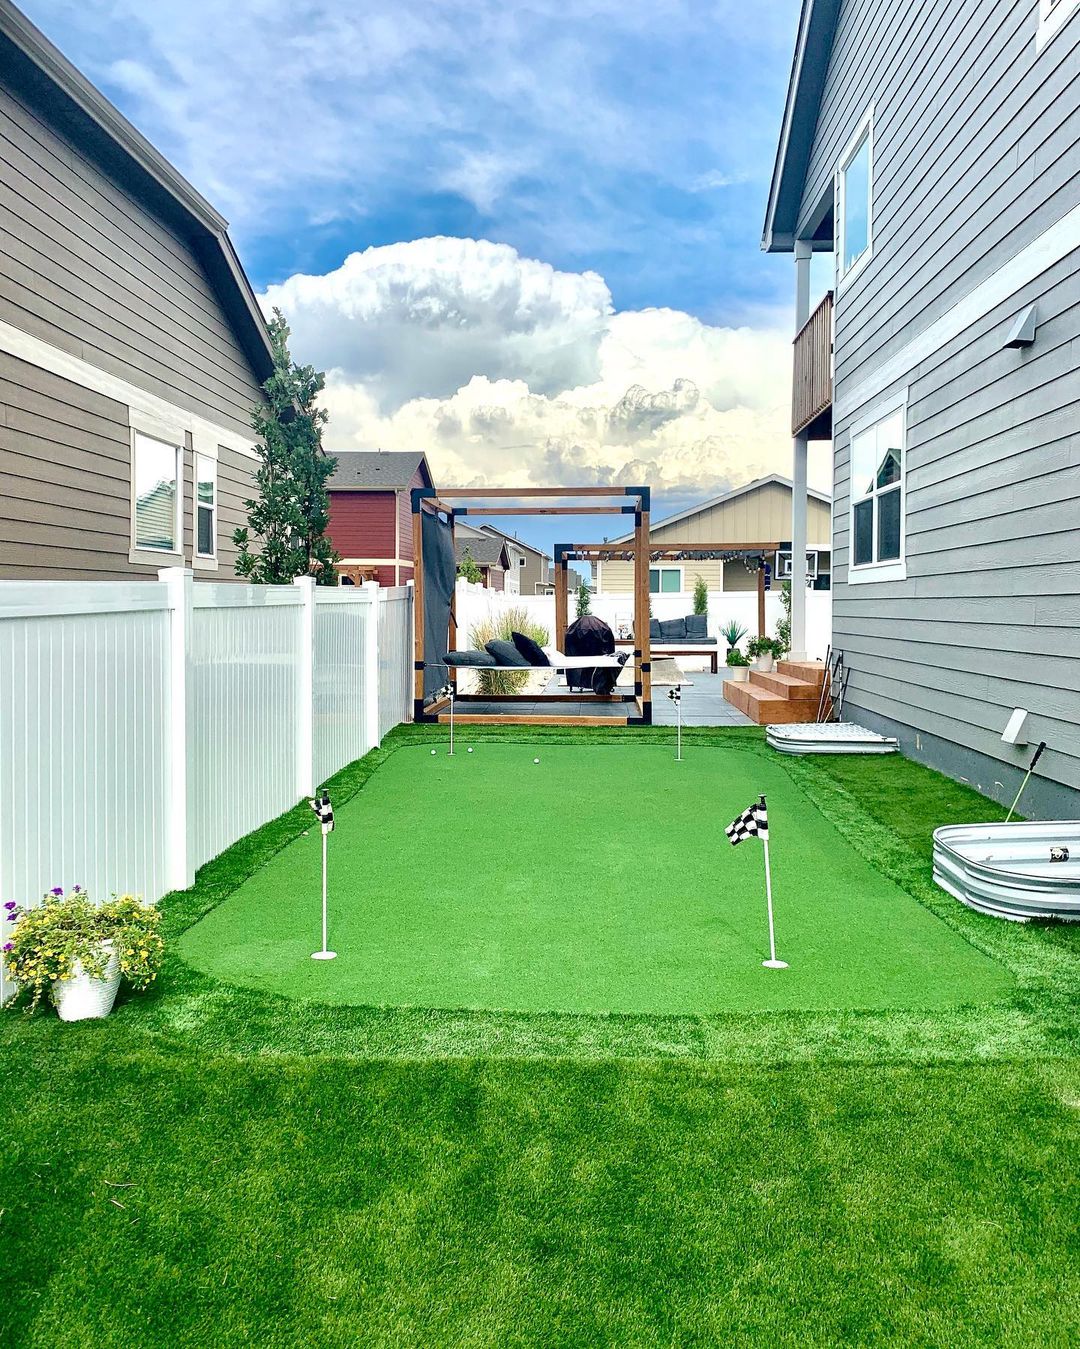 Backyard Putting Green. Photo by Instagram user @dudeanddad